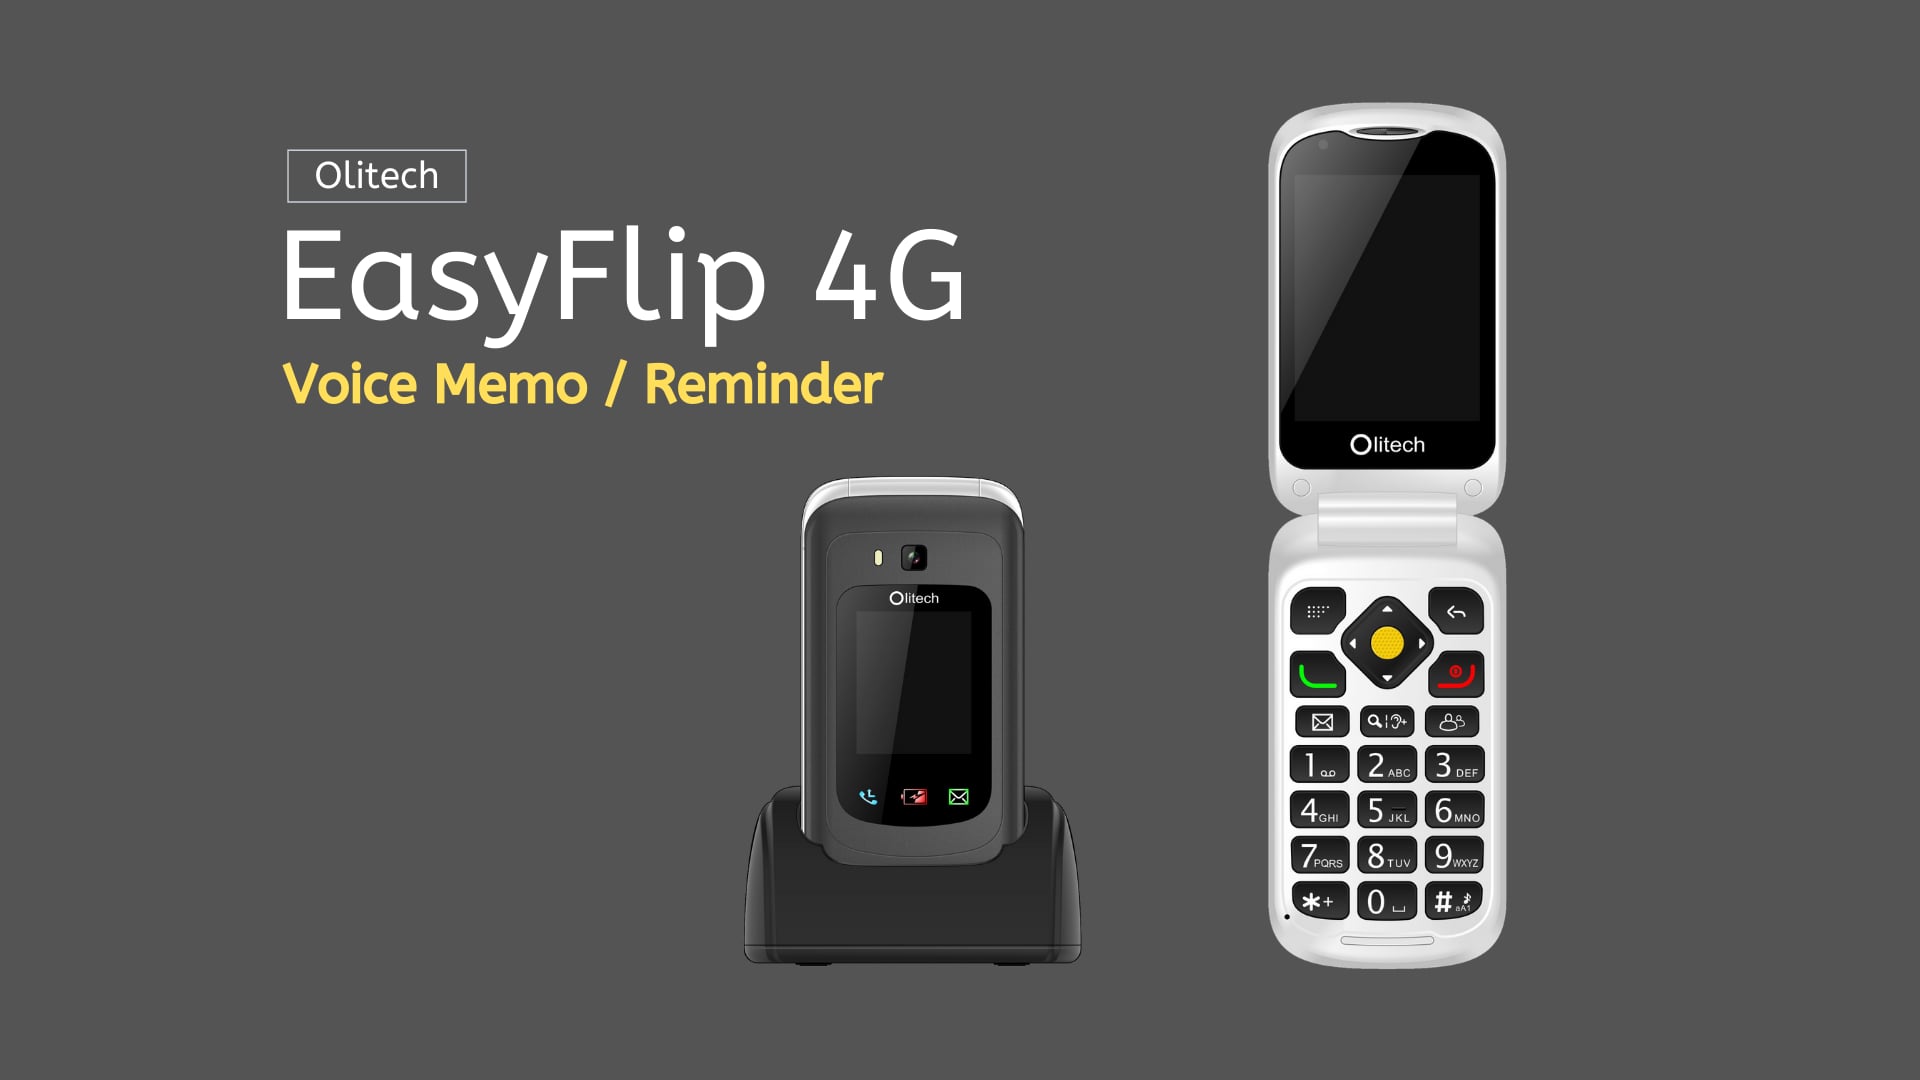 Olitech EasyFlip 4G - Voice Memo / Reminder